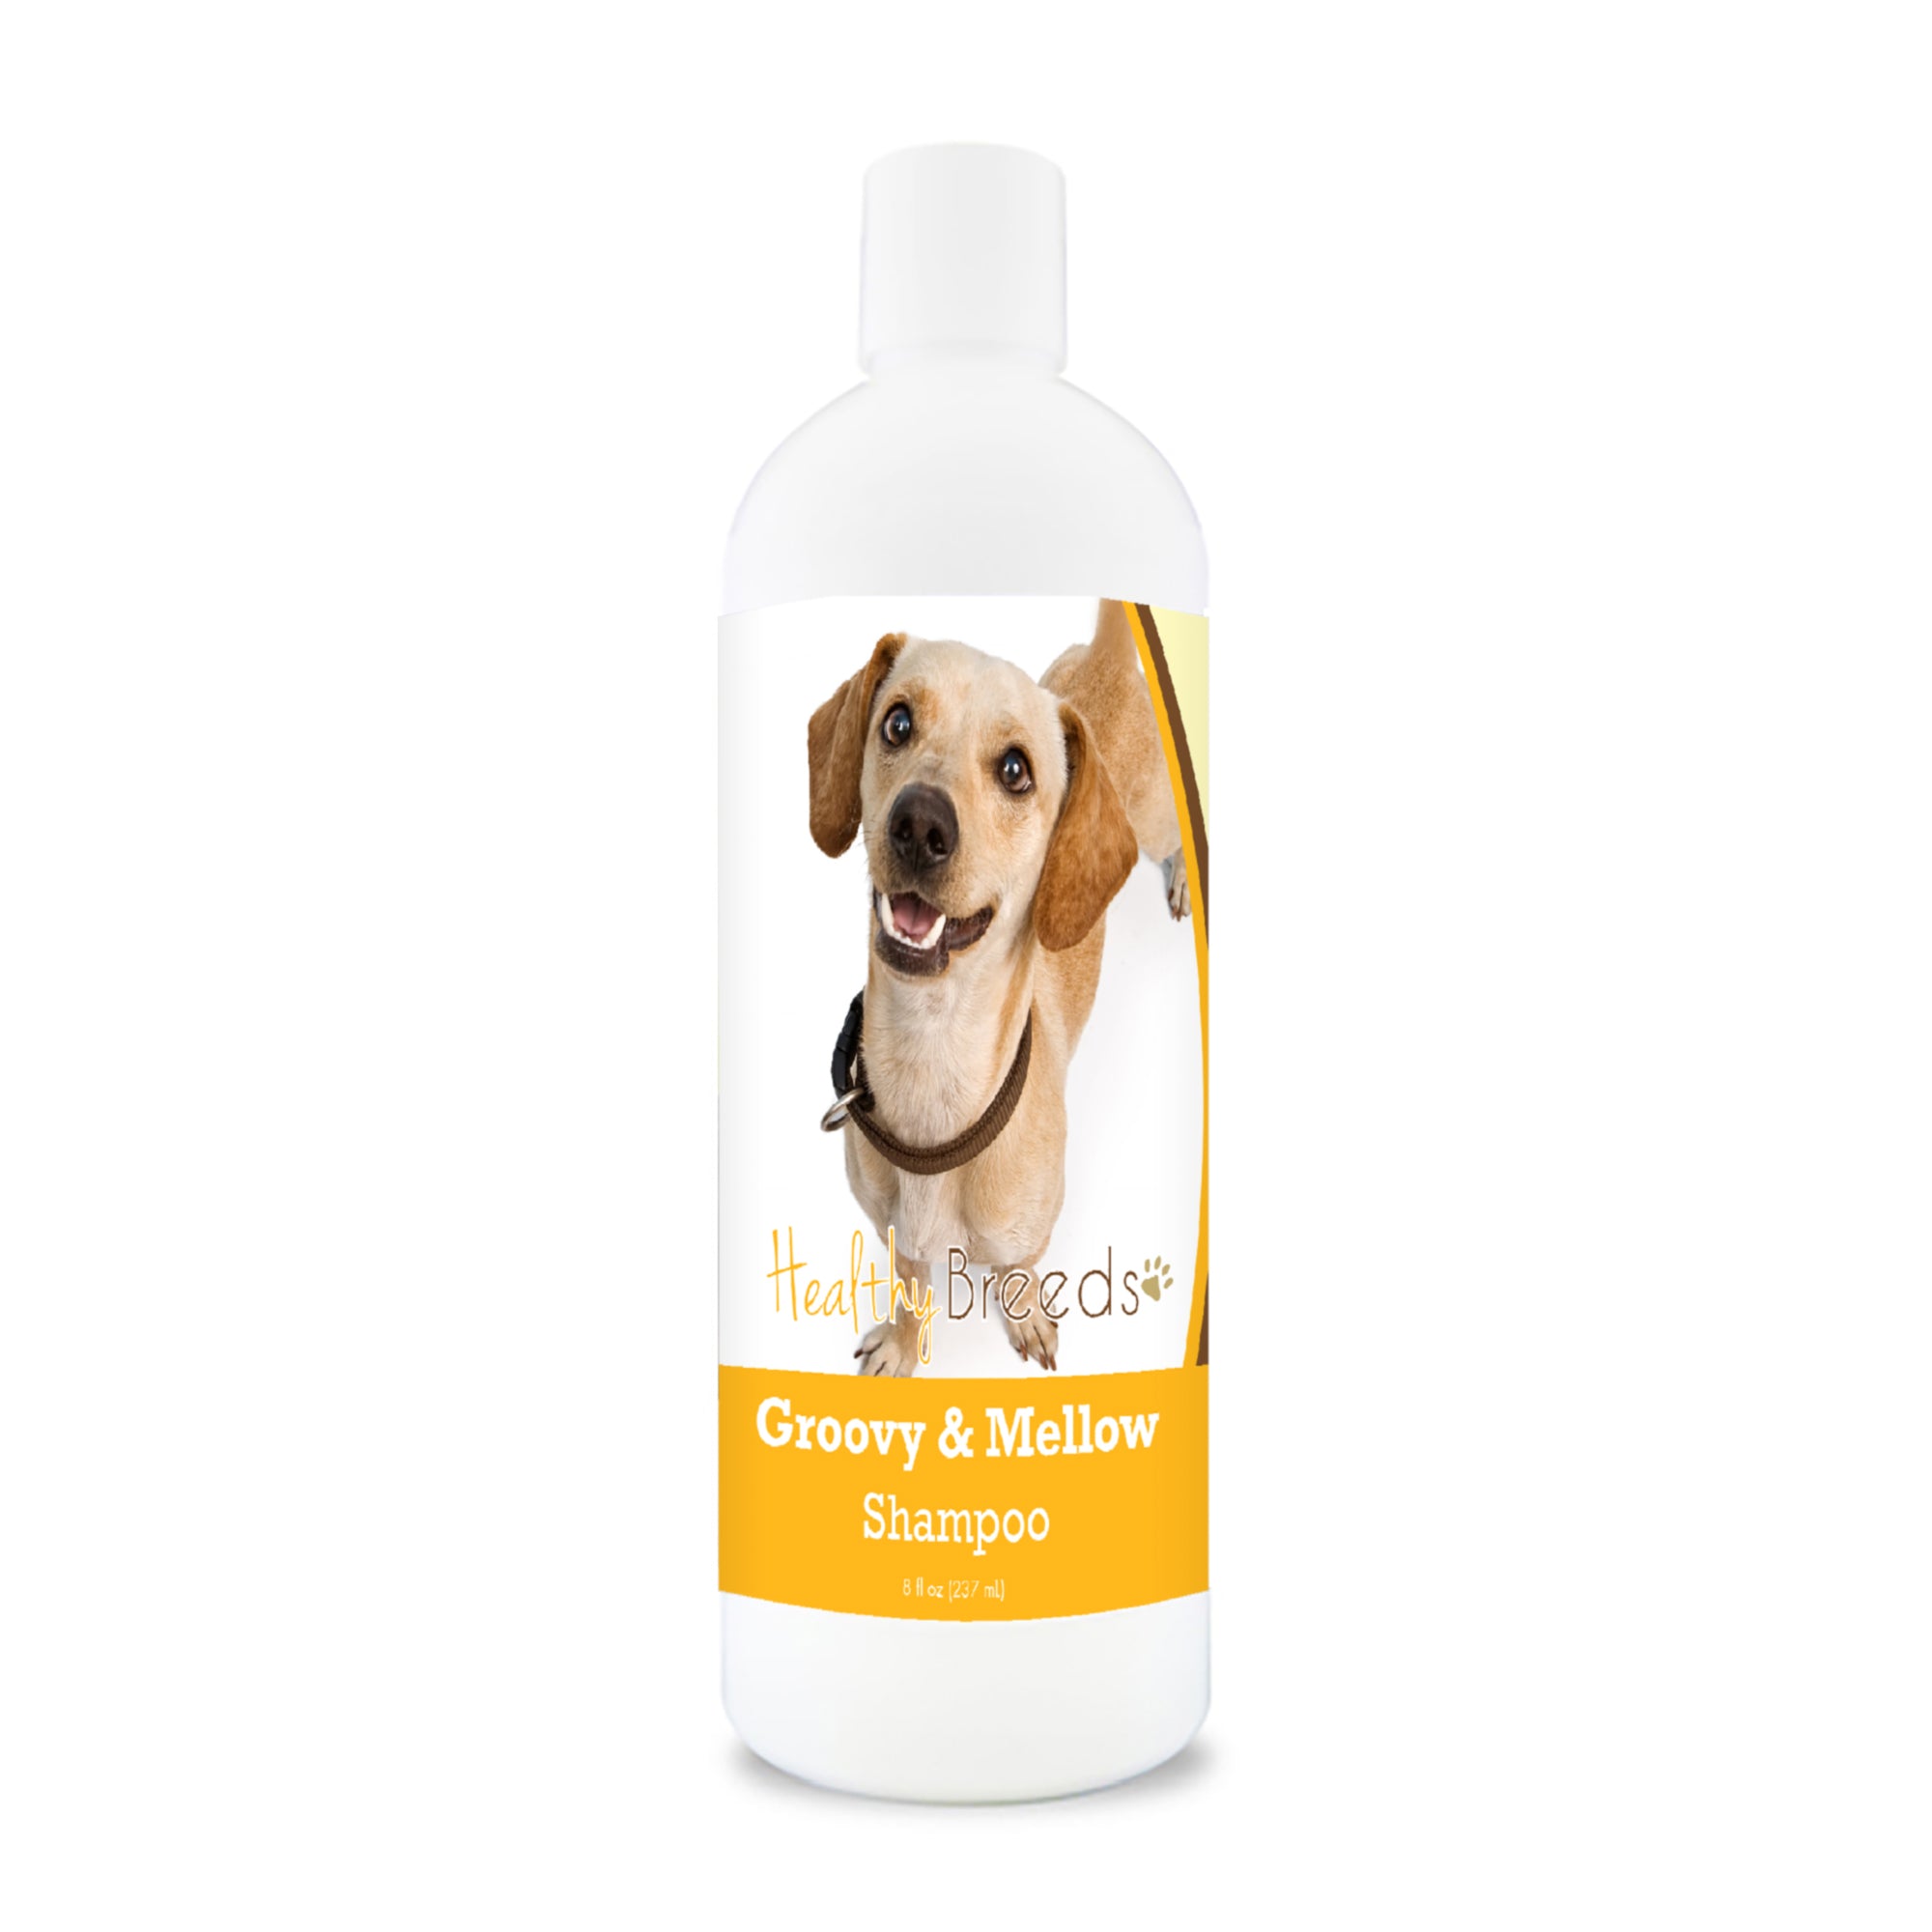 Chiweenie Groovy & Mellow Shampoo 8 oz